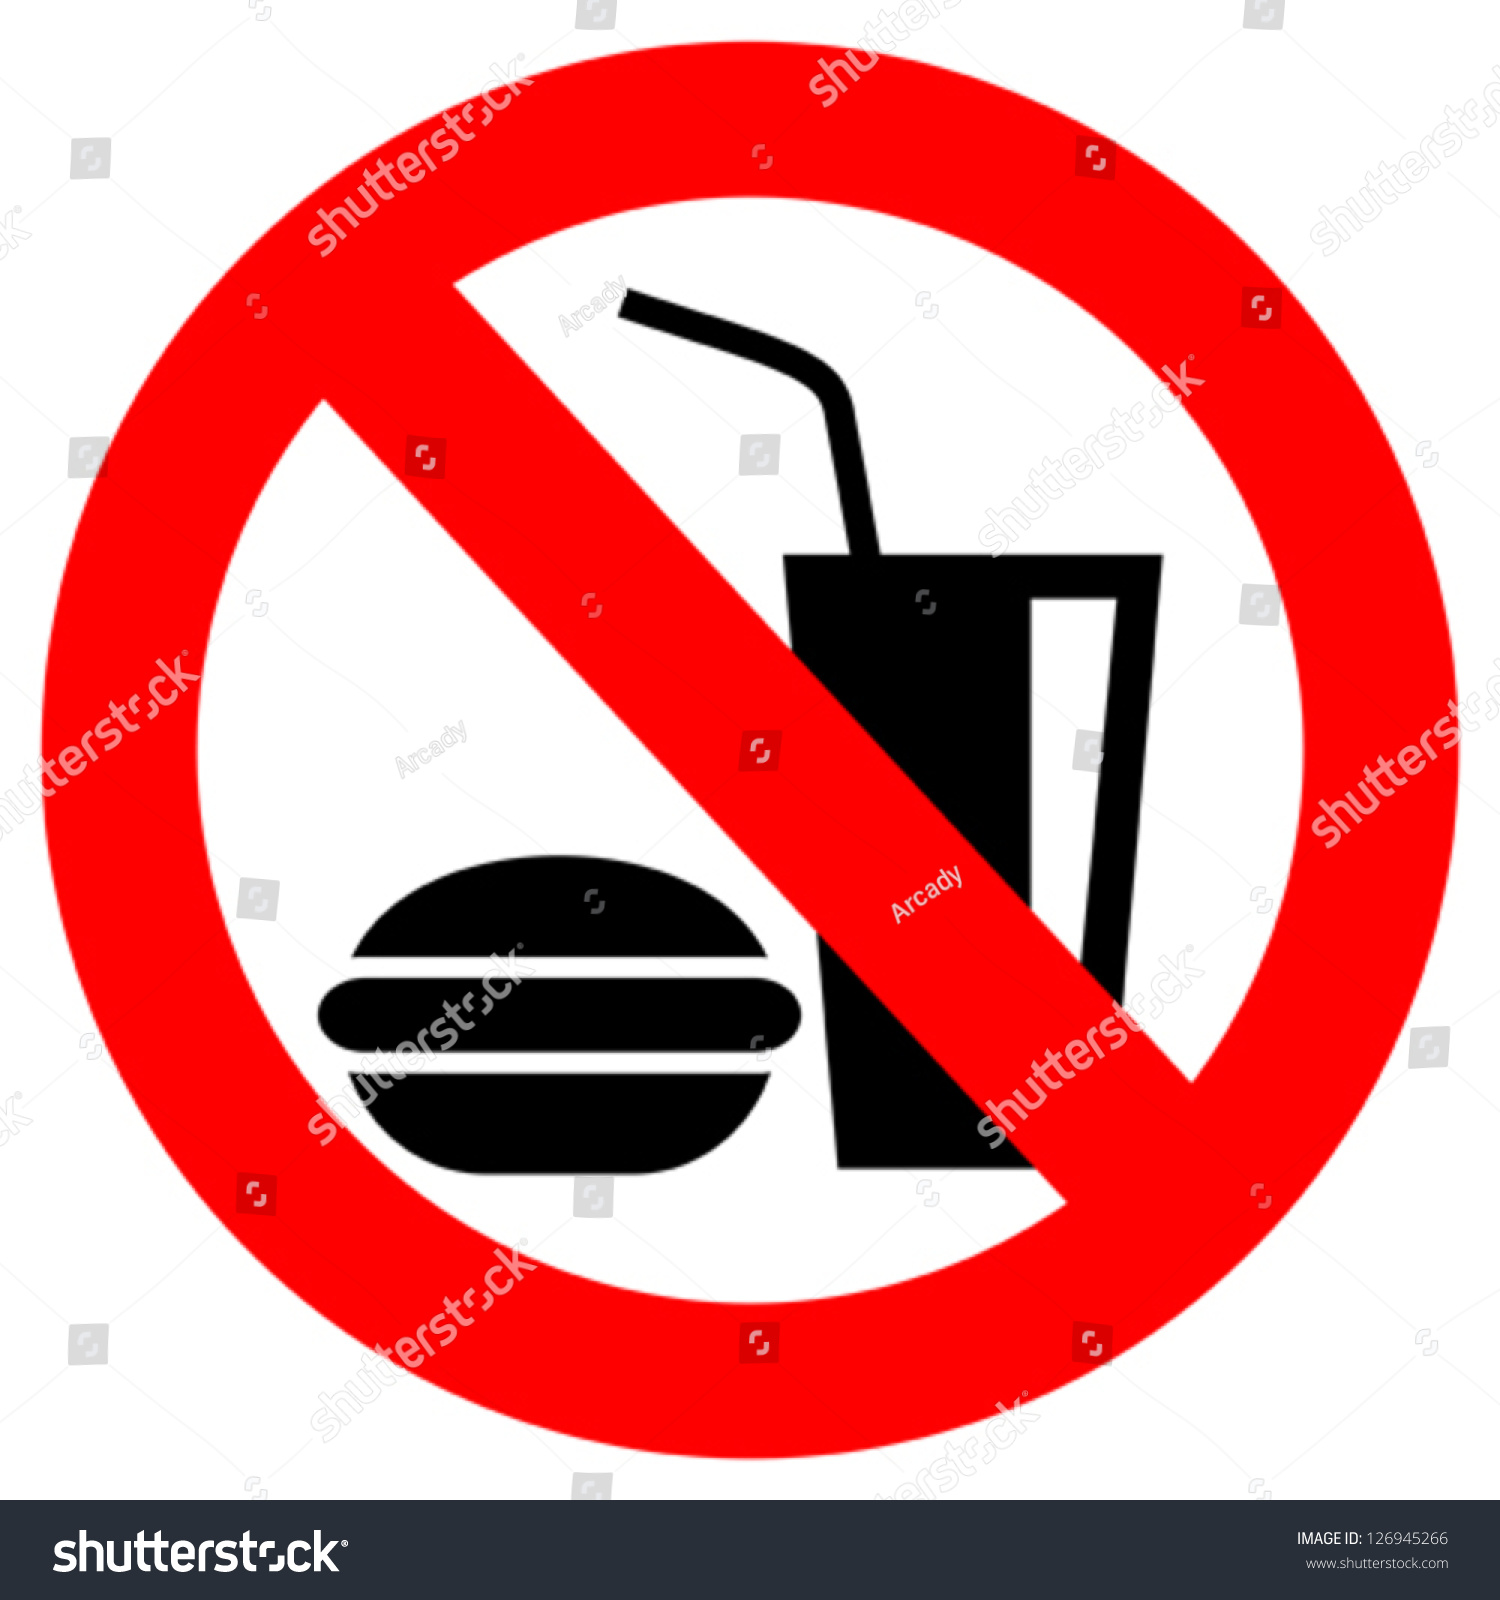 No Eating Vector Sign - 126945266 : Shutterstock